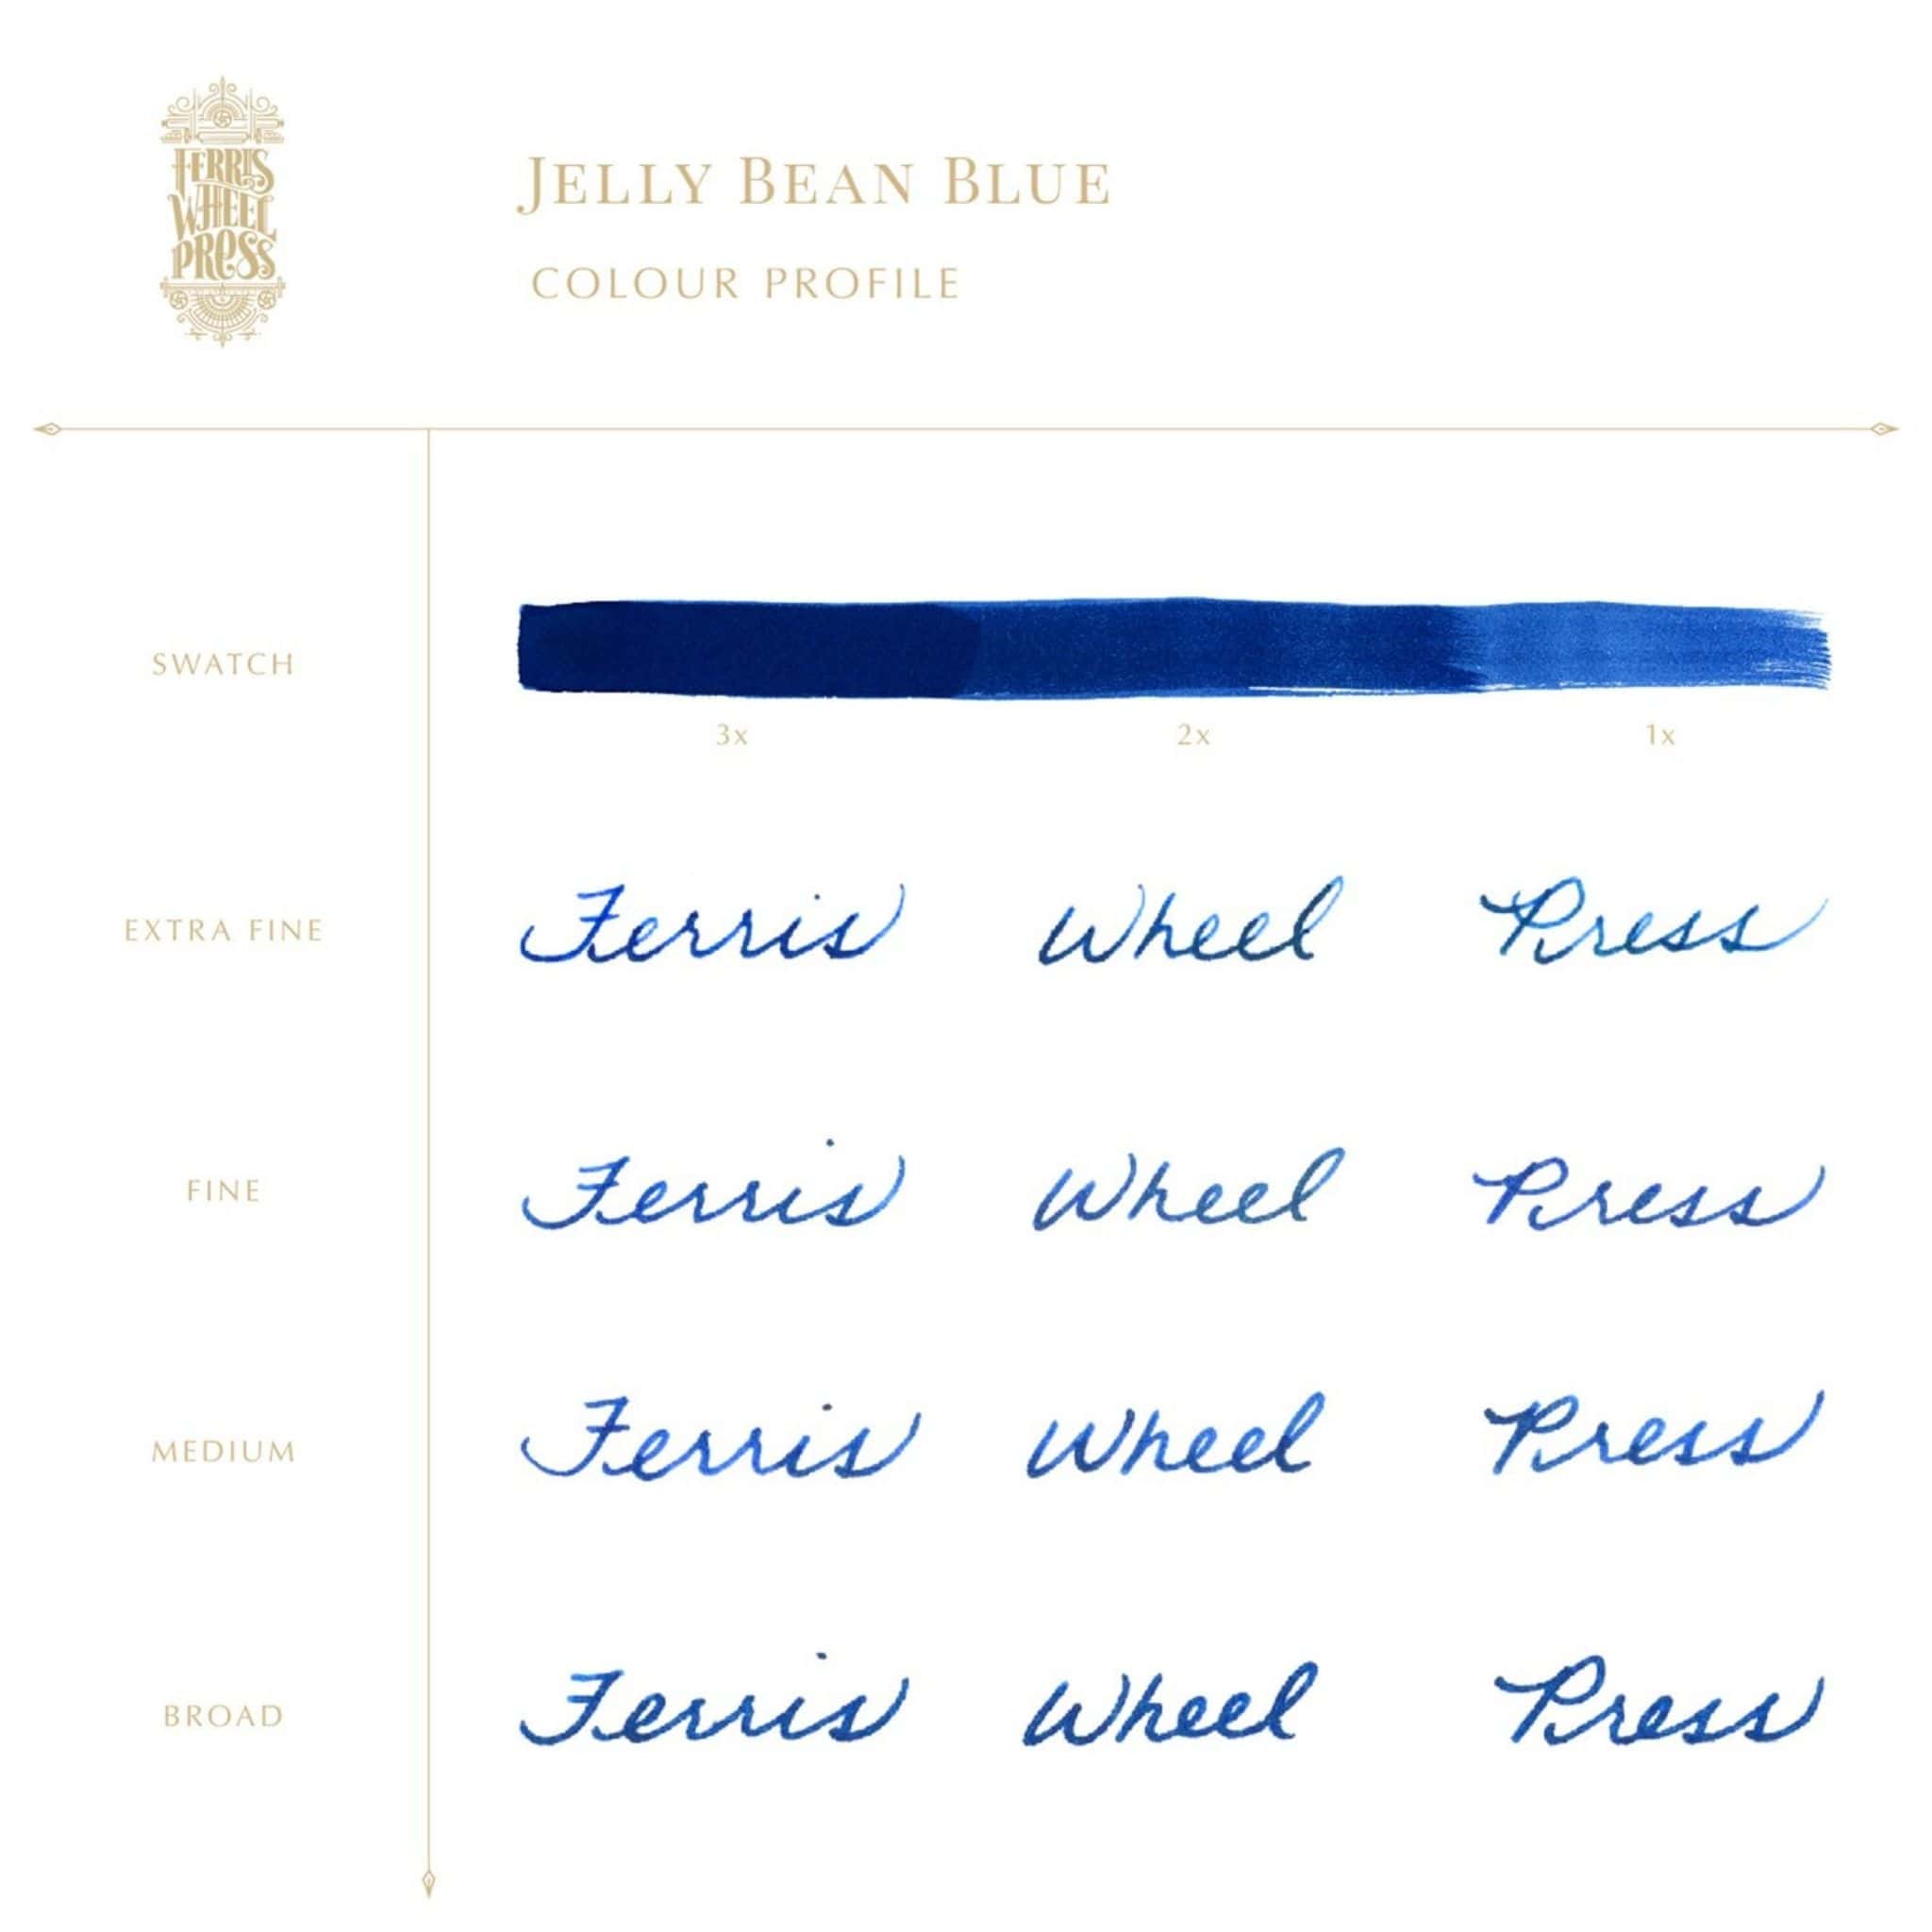 Ferris Wheel Press 85ml Jelly Bean Blue Ink writing samples - Paper Kooka